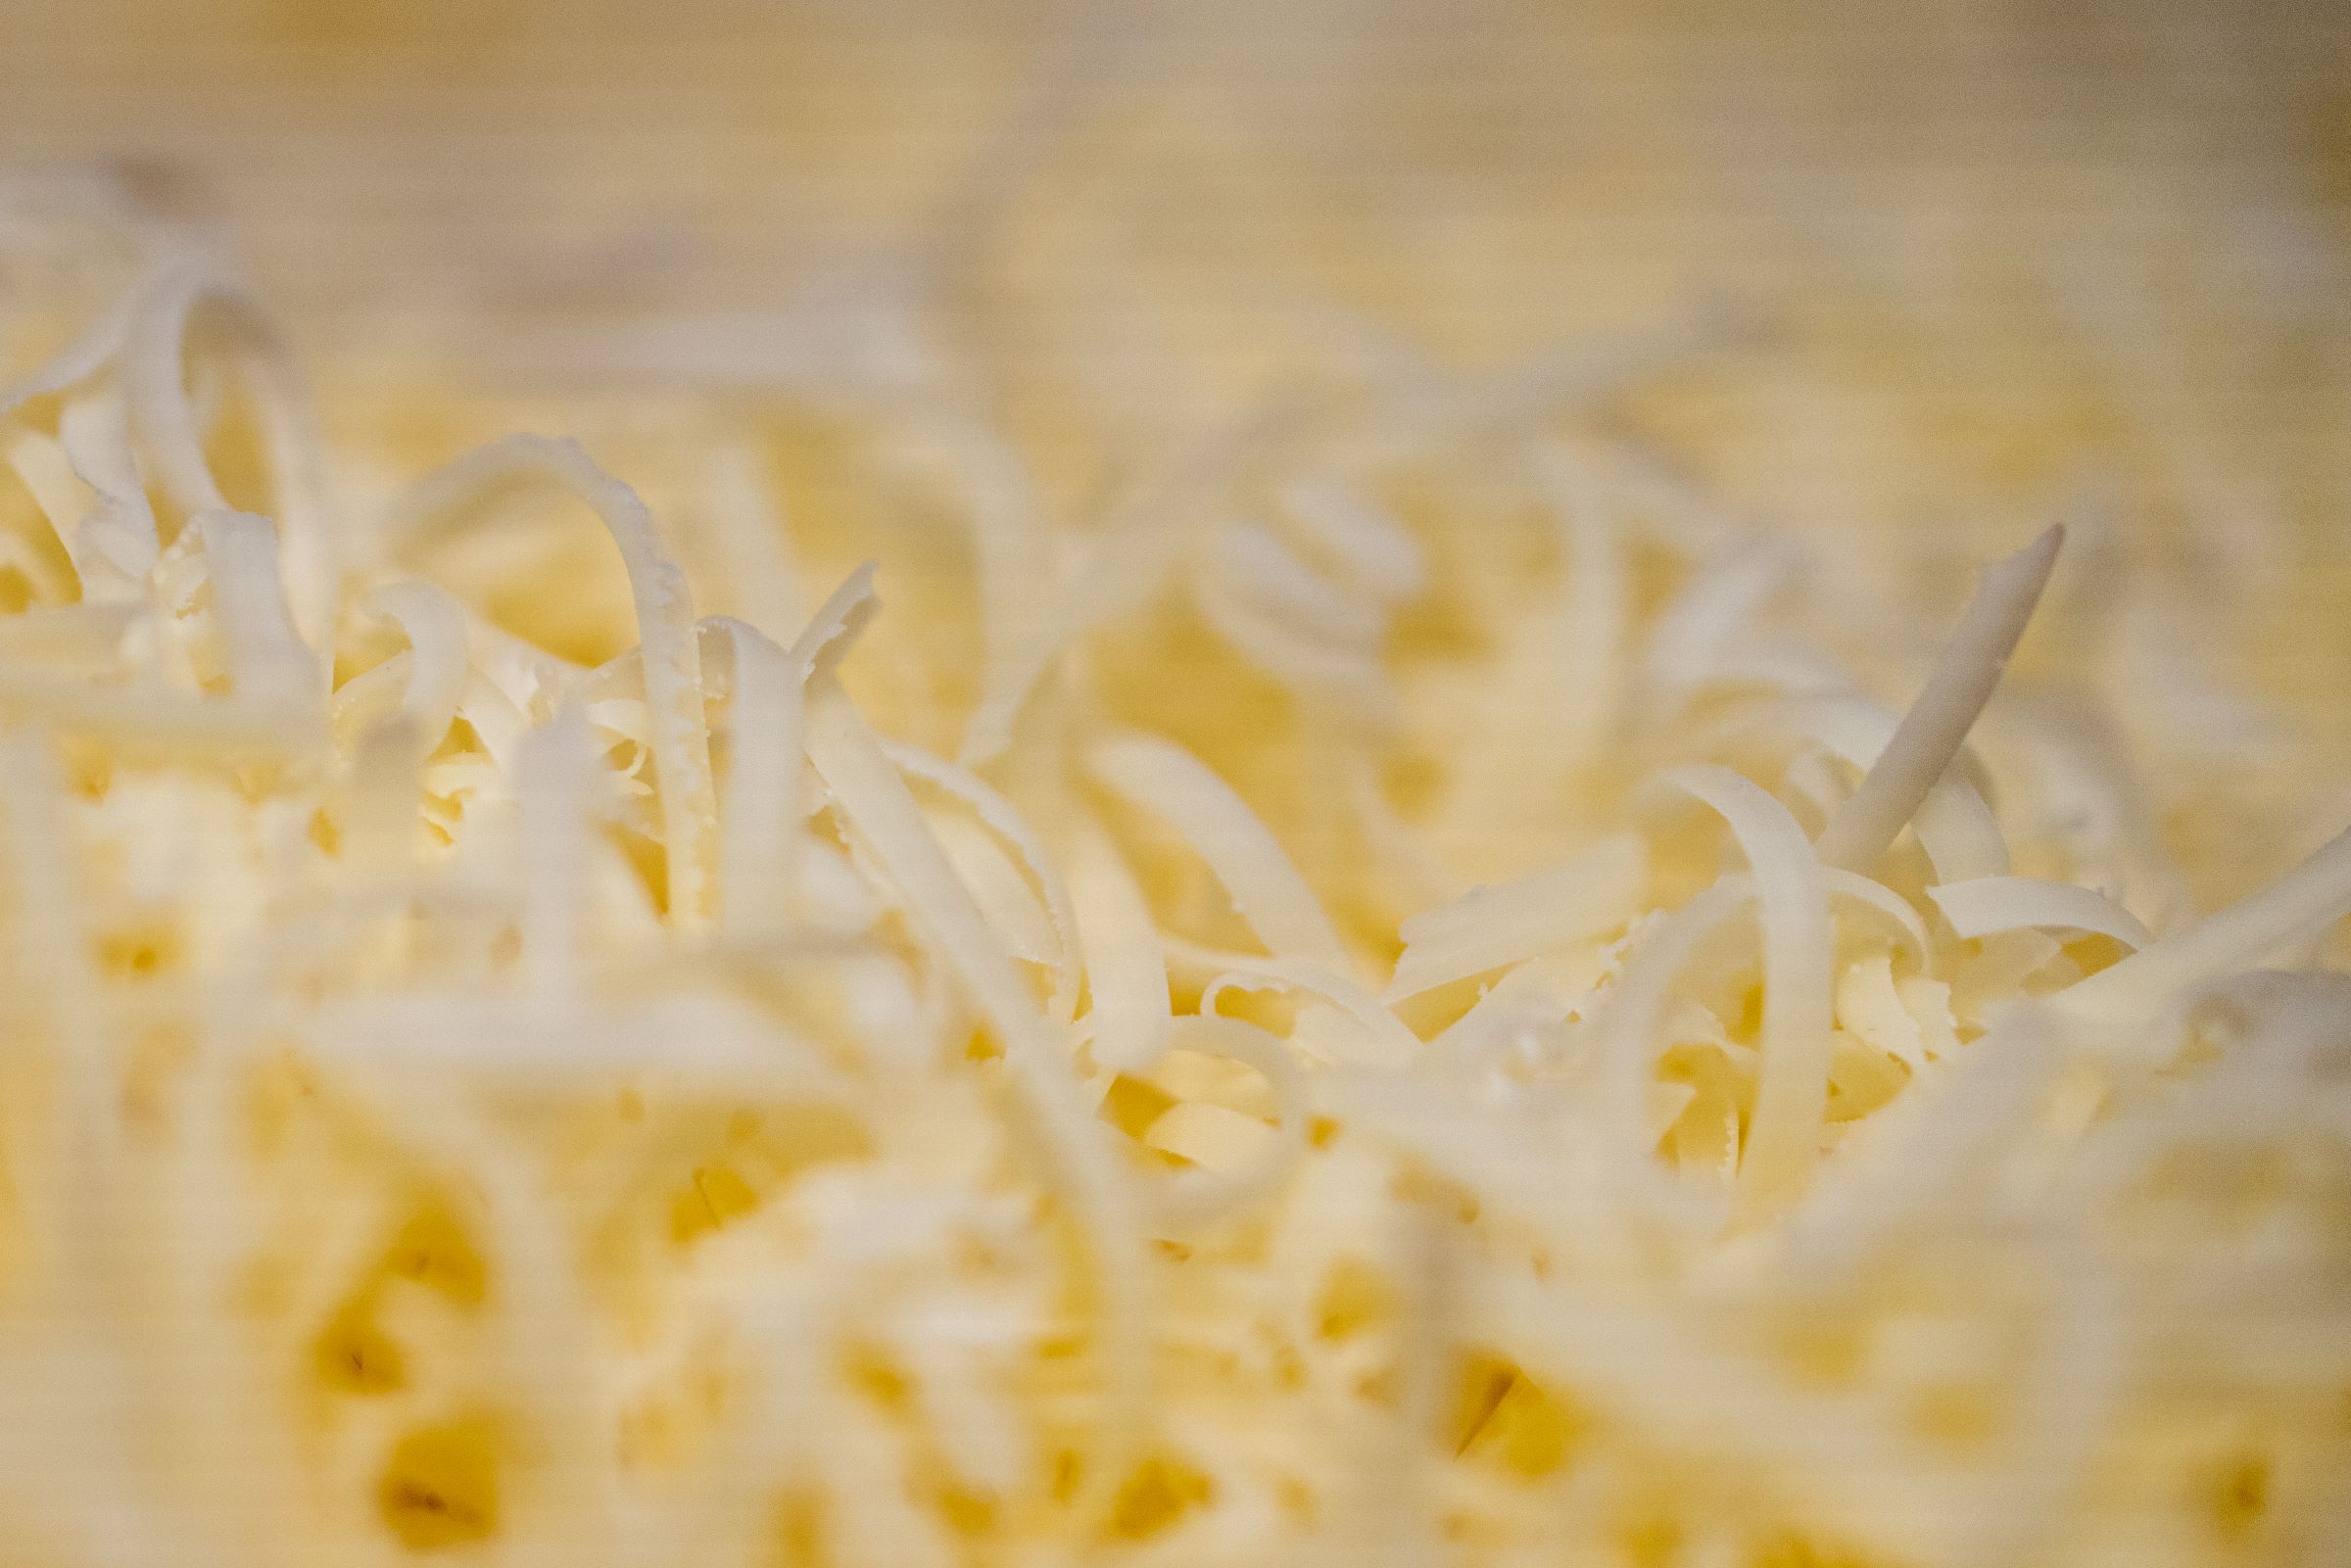 Cubos de queijo